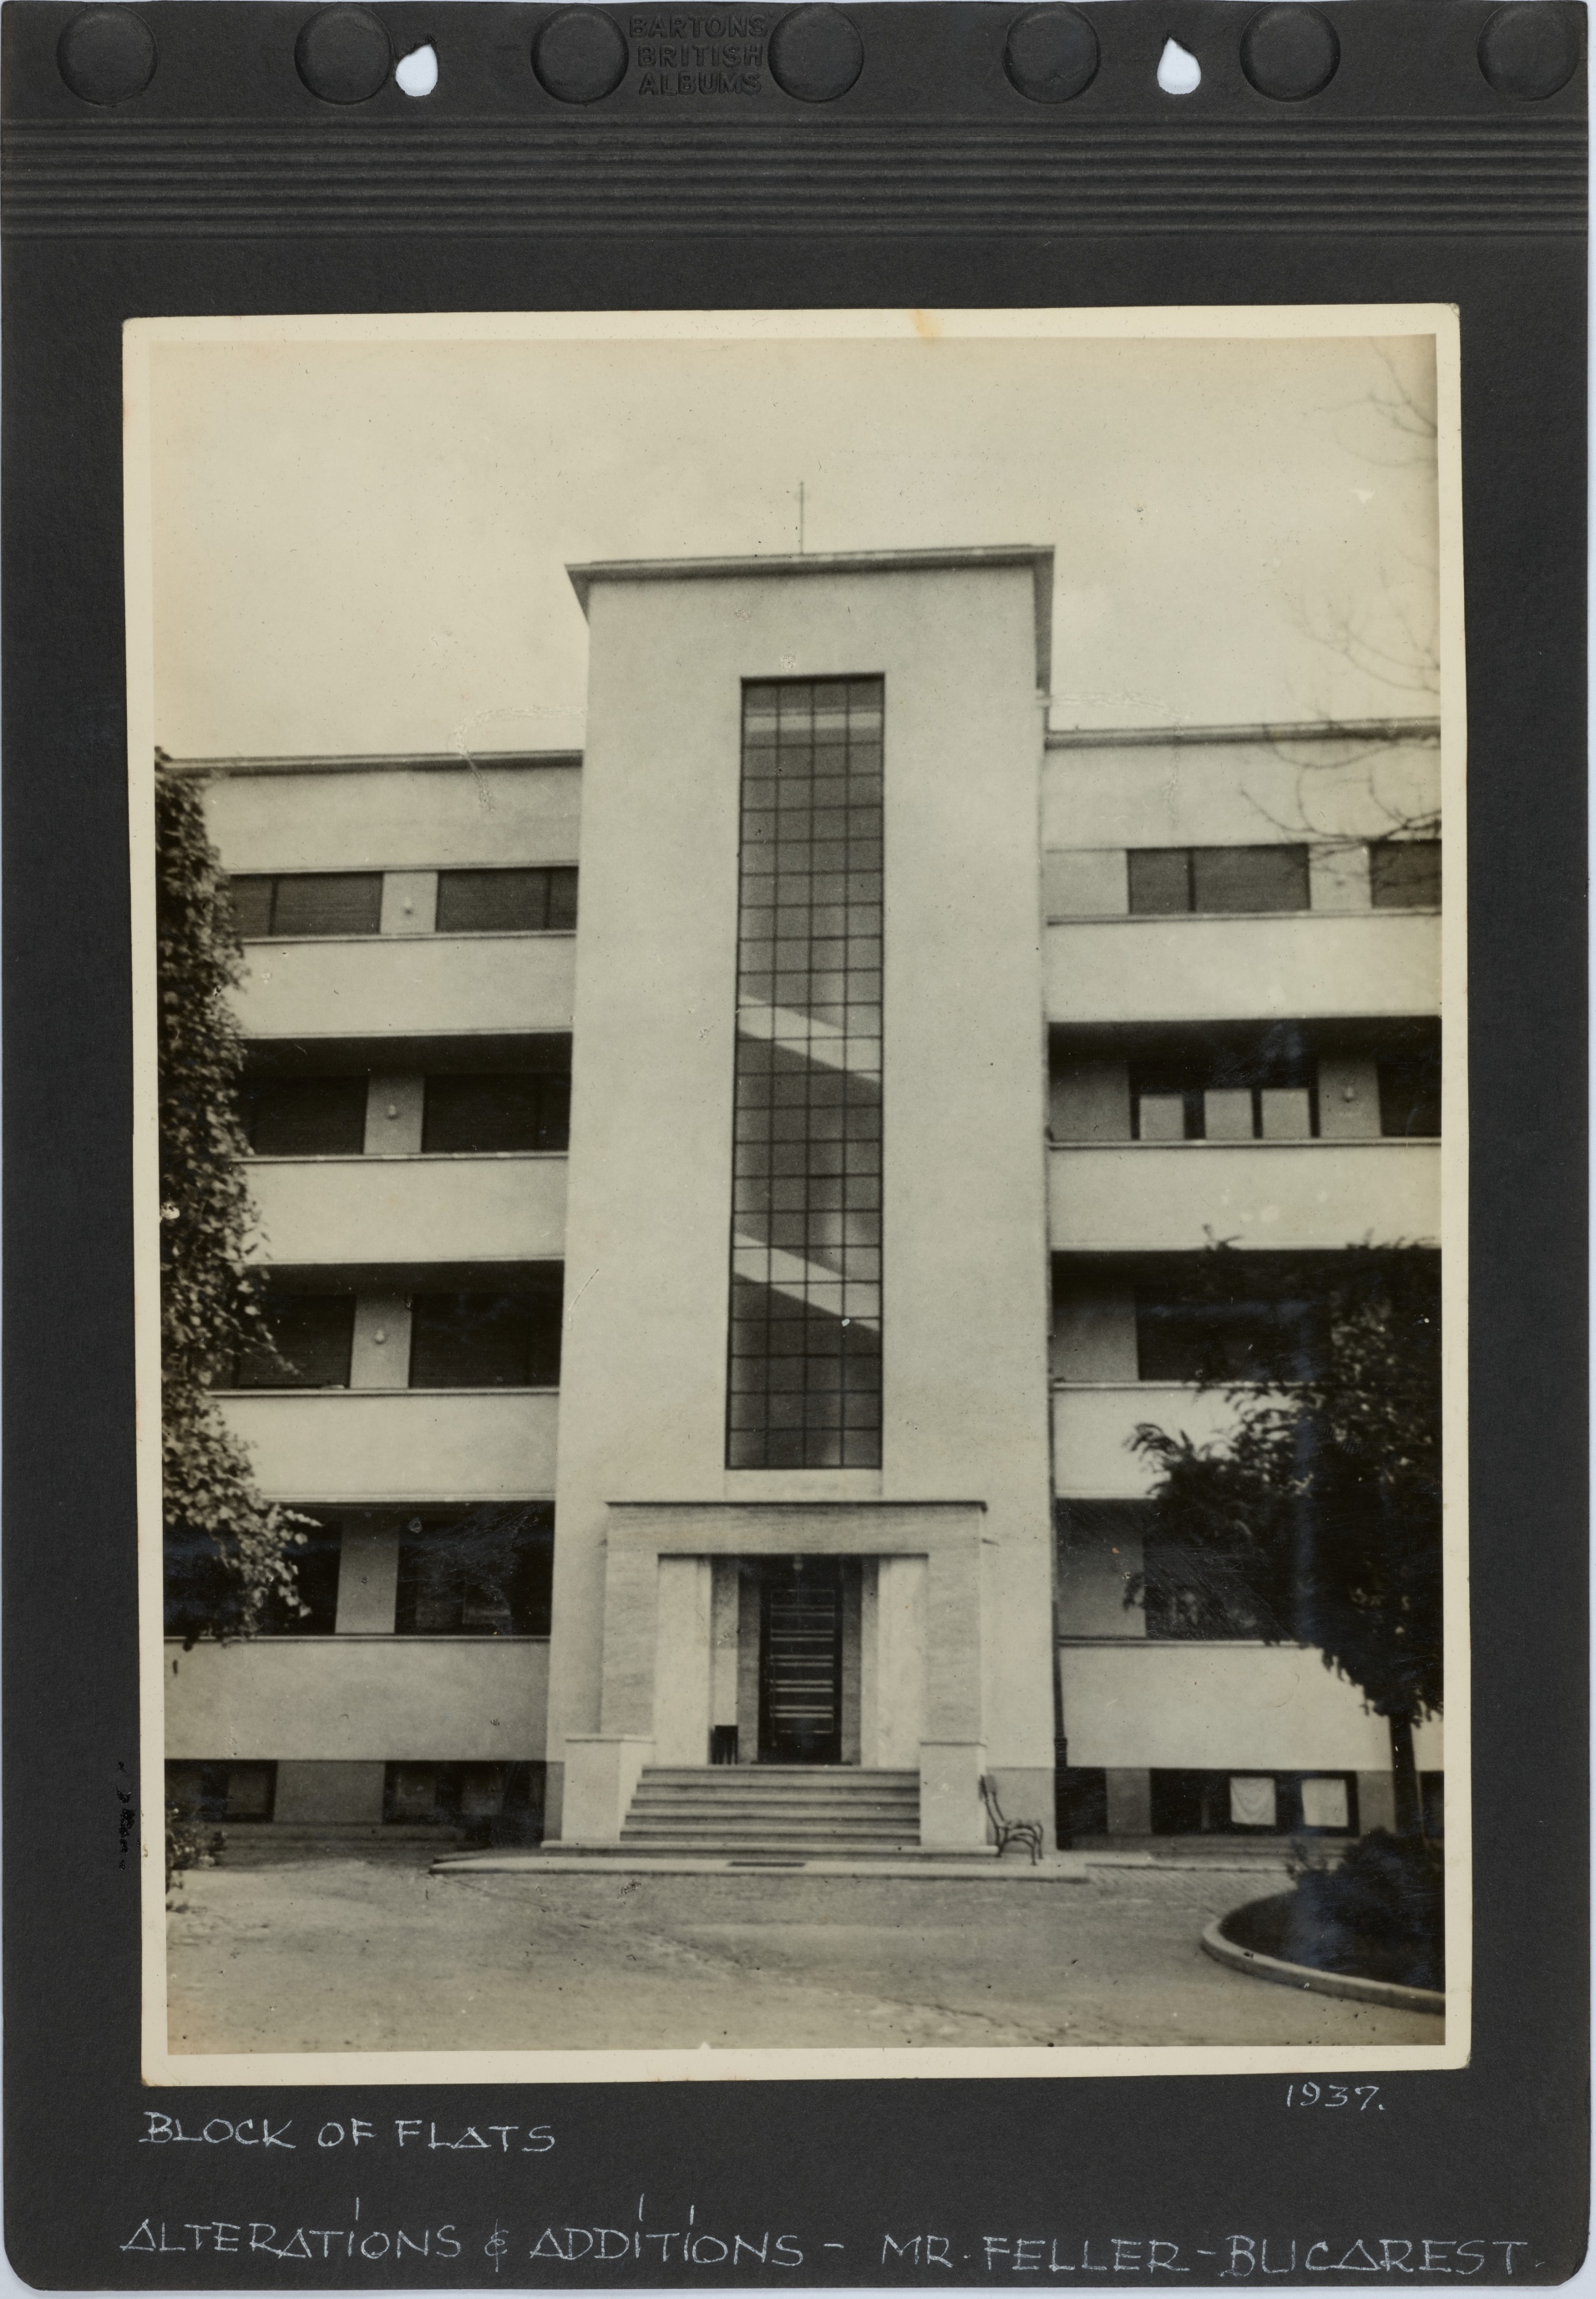 Block of flats. Alterations & additions - Mr Feller - Bucarest, 1937